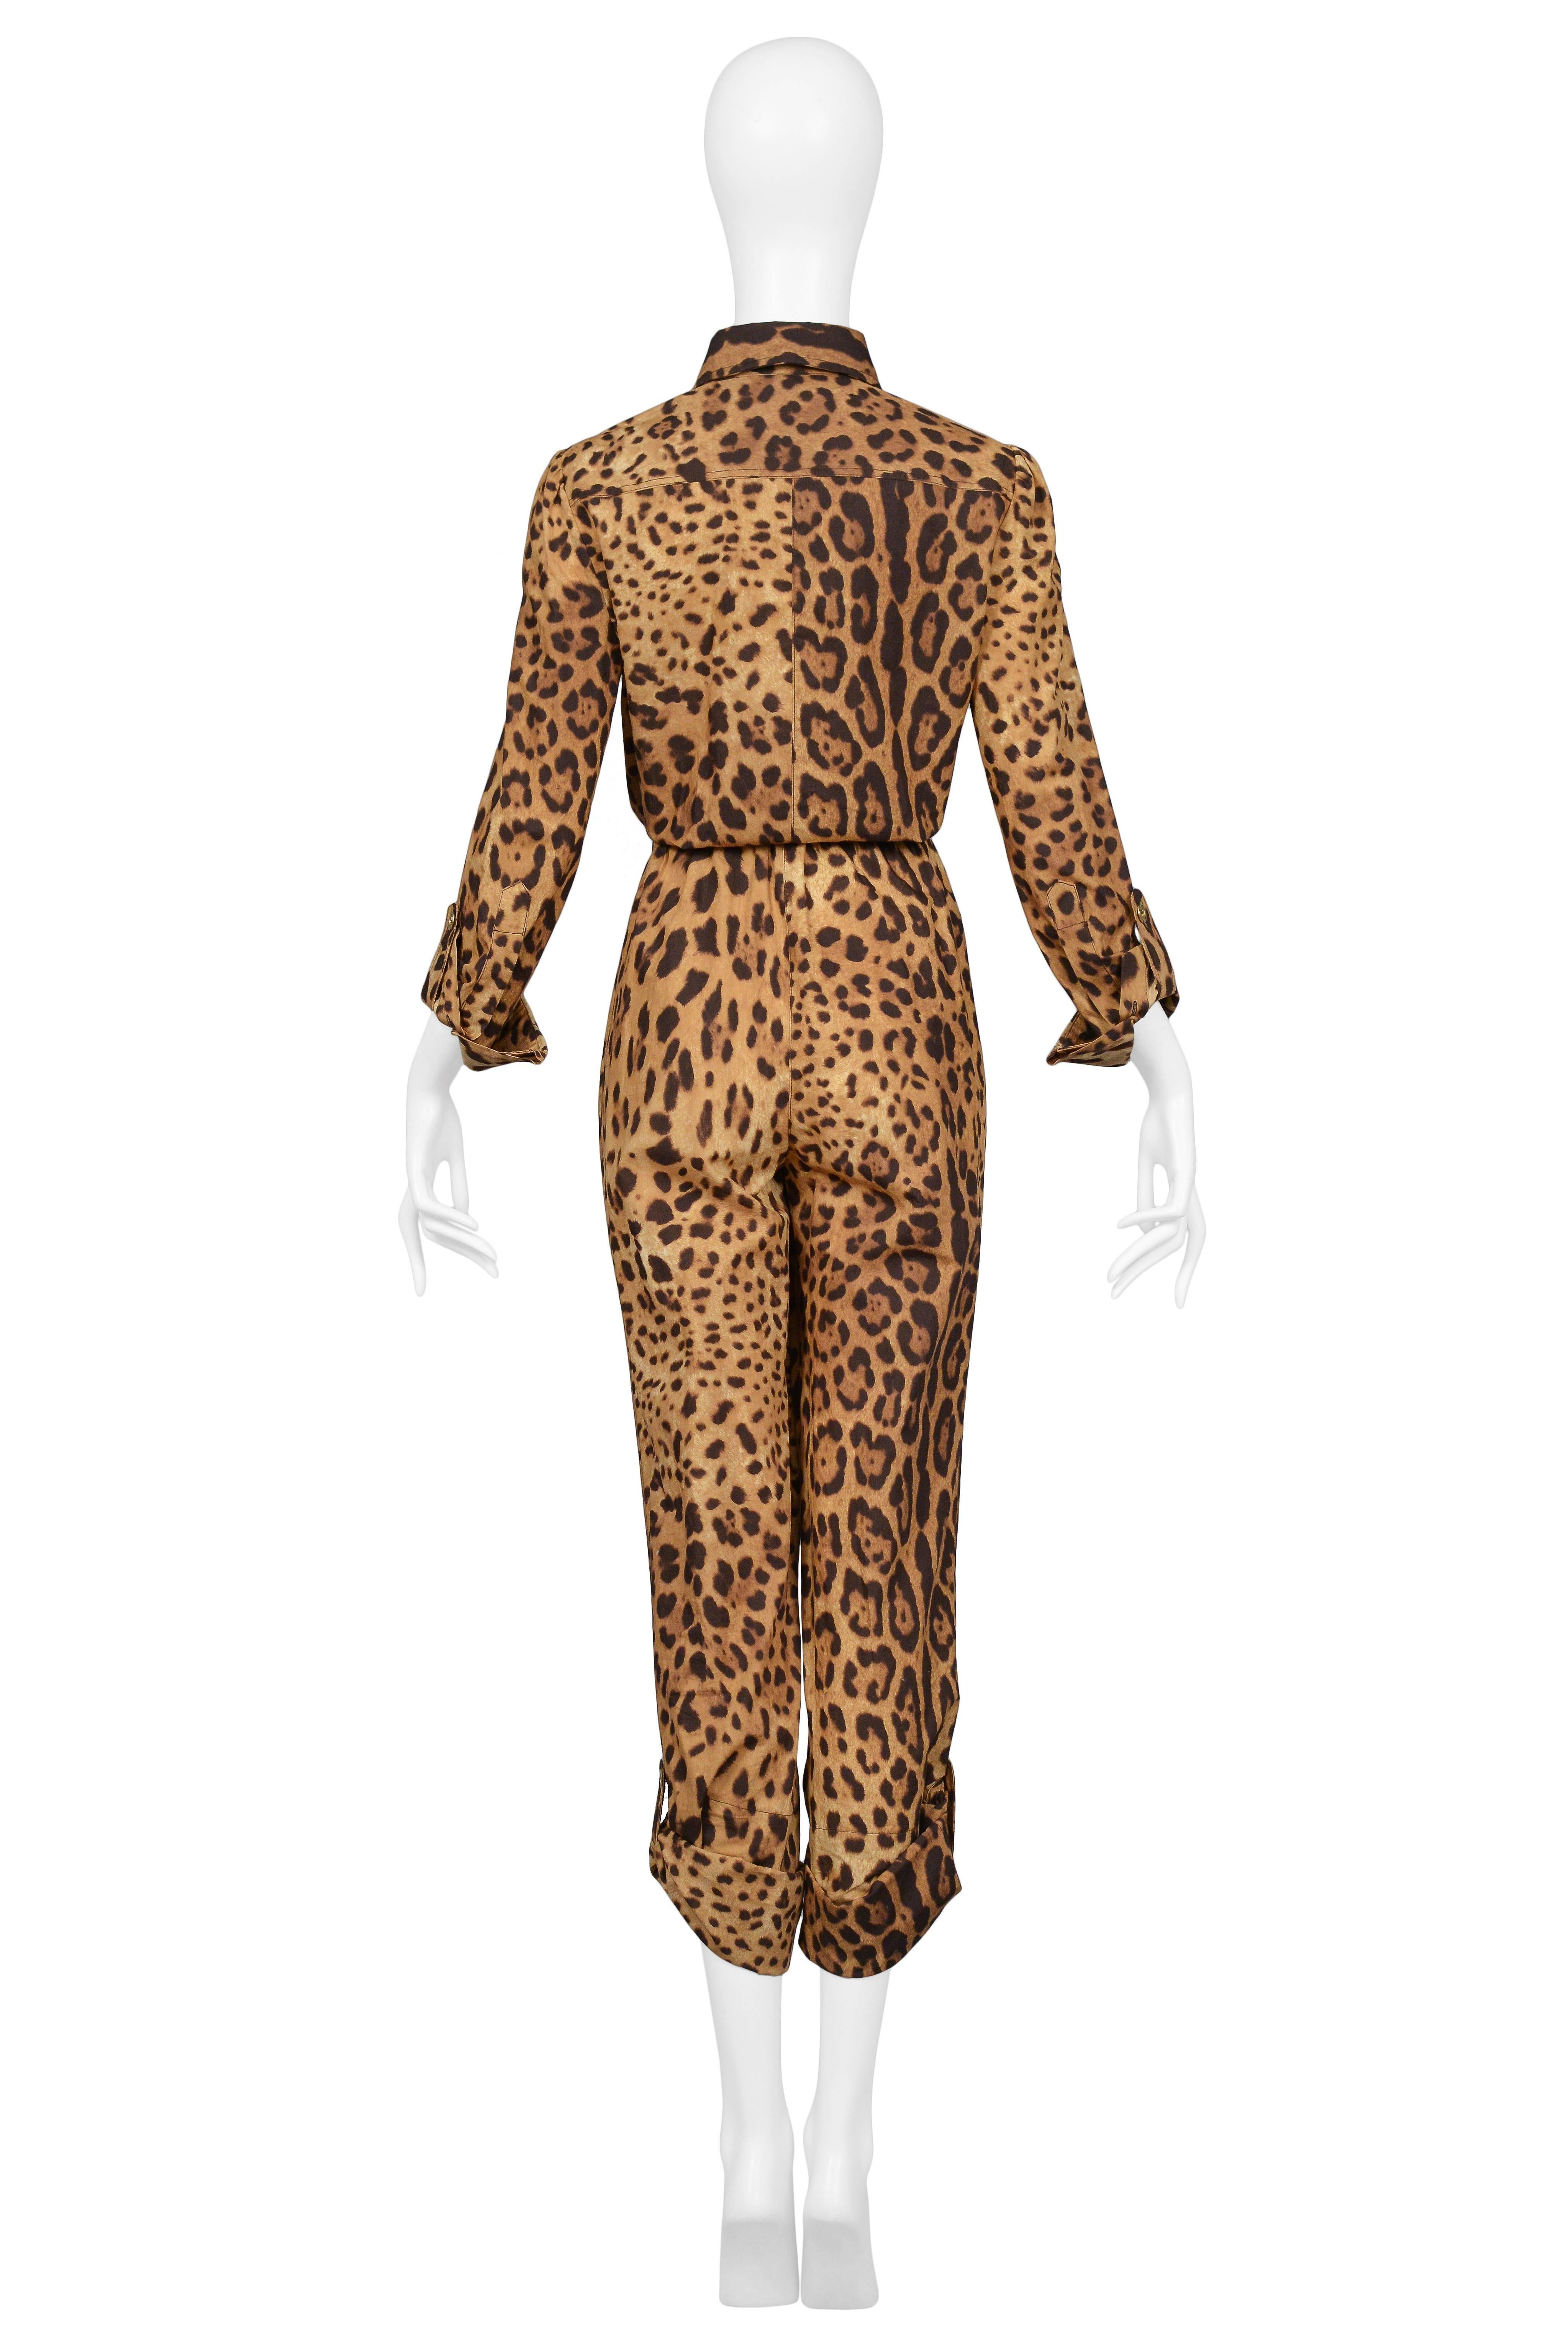 Super Chic Dolce & Gabbana Cotton Leopard Safari Style Belted Jumpsuit 1